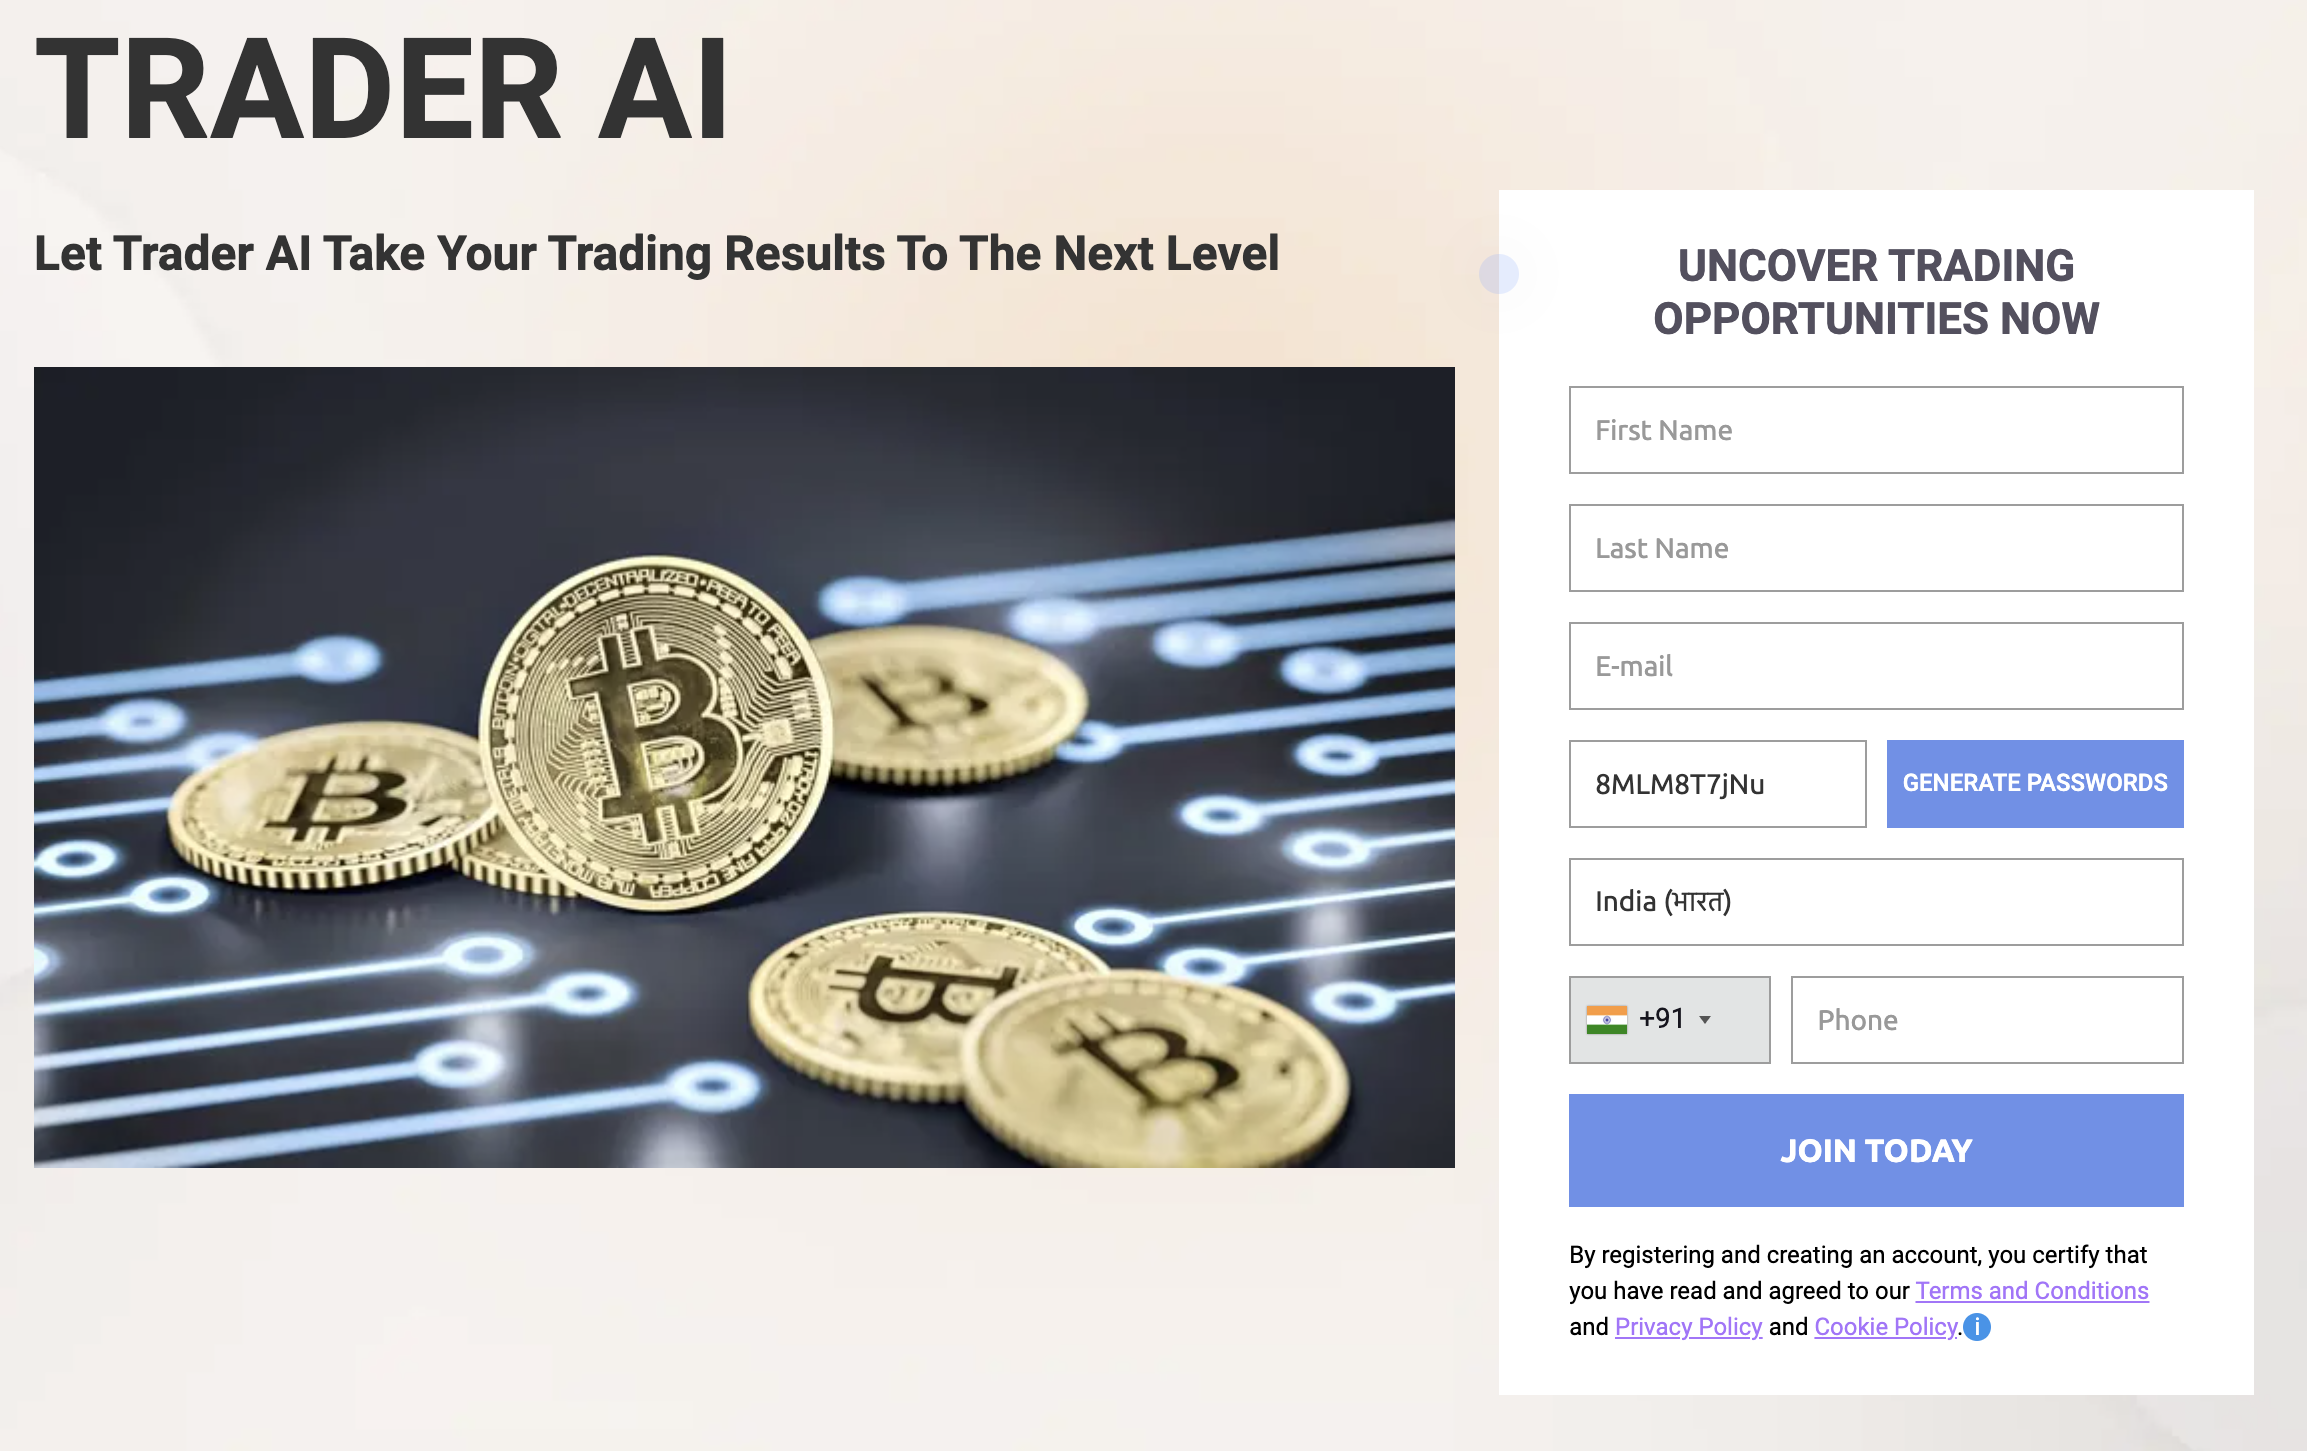 Trader AI Review - Legit Crypto Trading Platform? - Techopedia